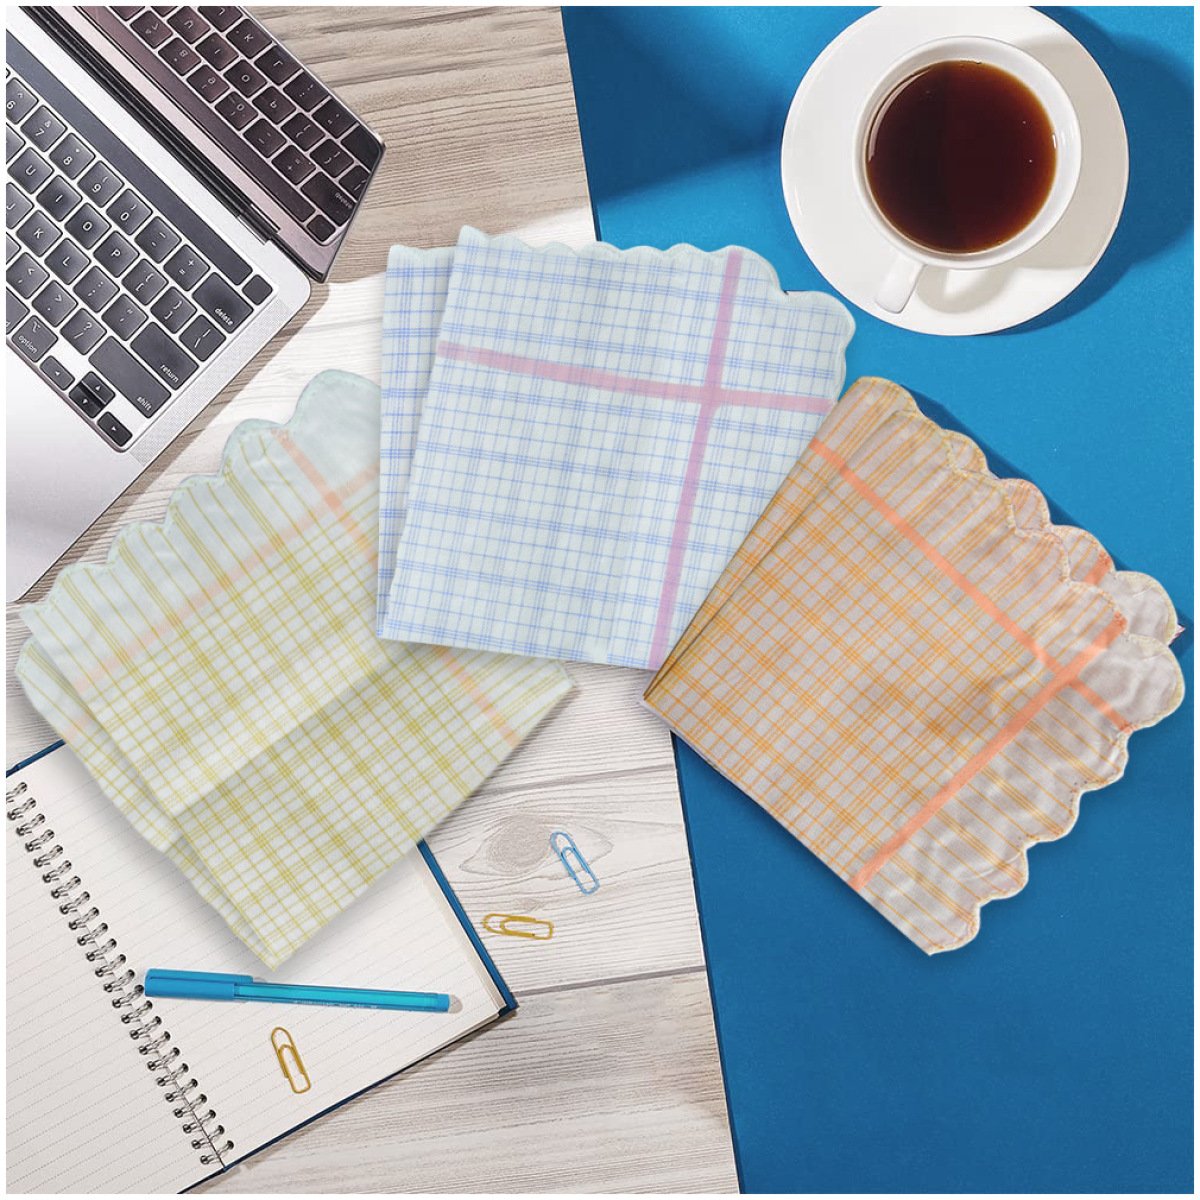 SHELTER Premium HandKerchiefs |100% Cotton Hankies With Multi Color For Ladies | Size 28 x 30 CM Pack of 12